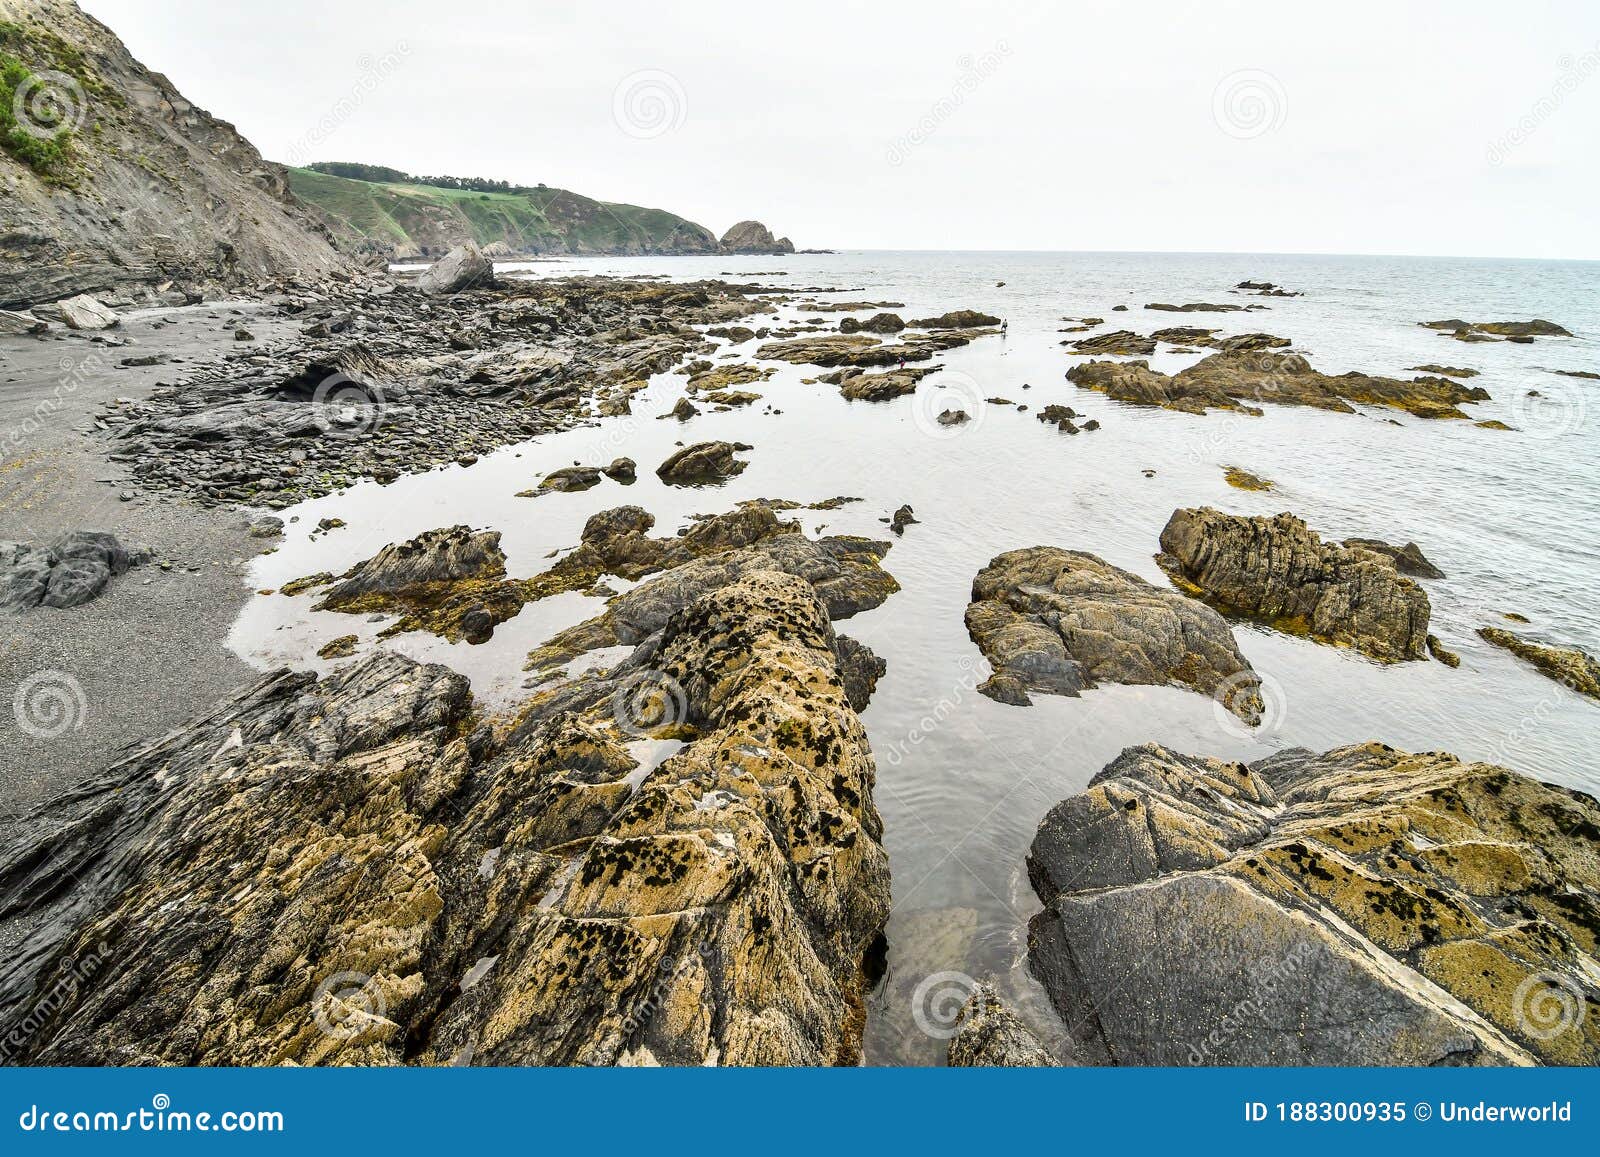 rocks in the sea, photo as a background , in principado de asturias, spain europe